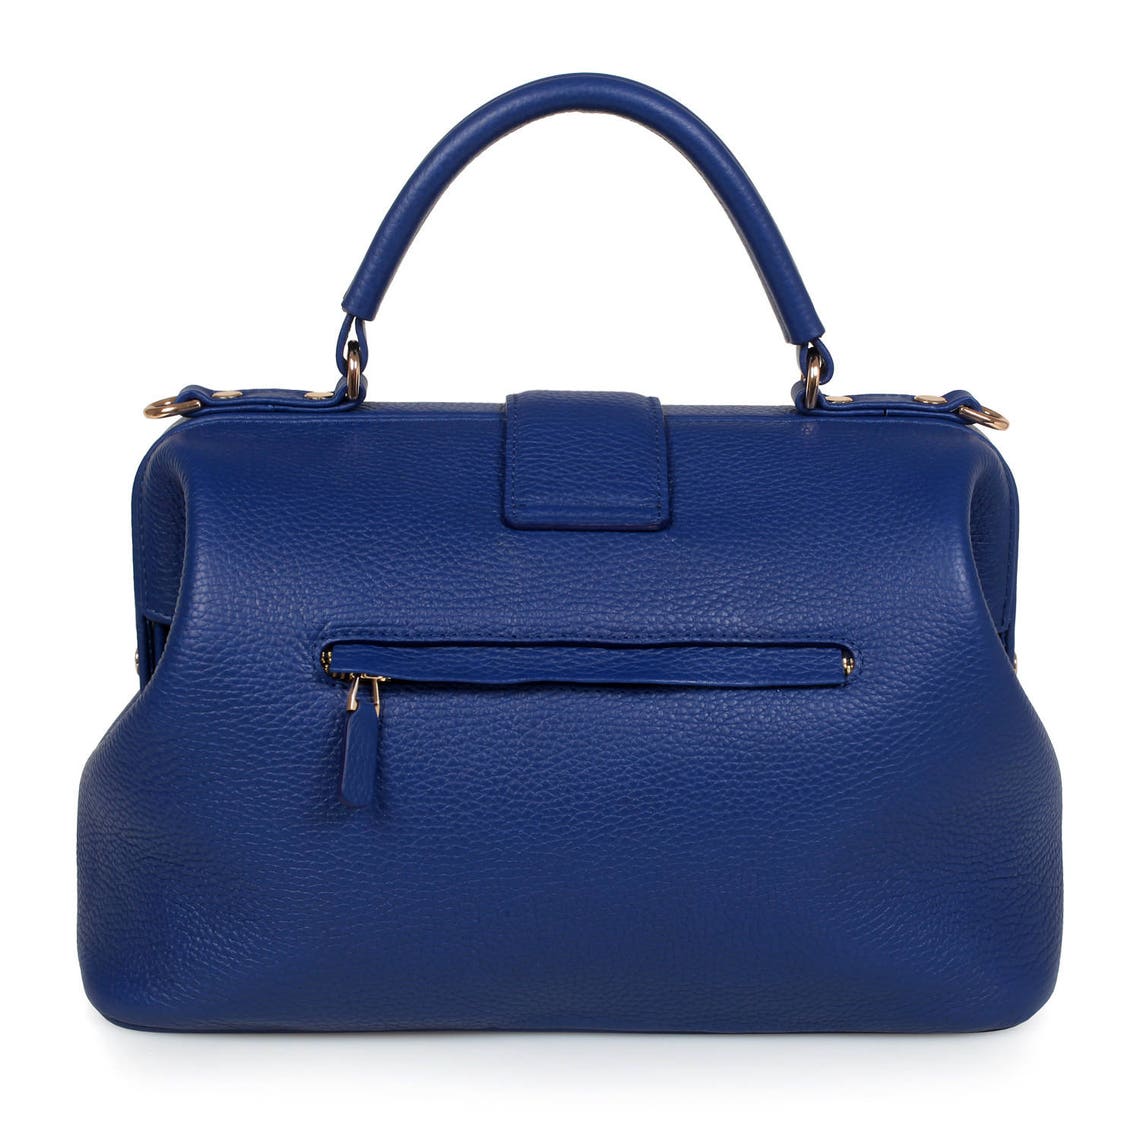 Leather doctor bag for women Blue Leather Handbag Top Handle | Etsy